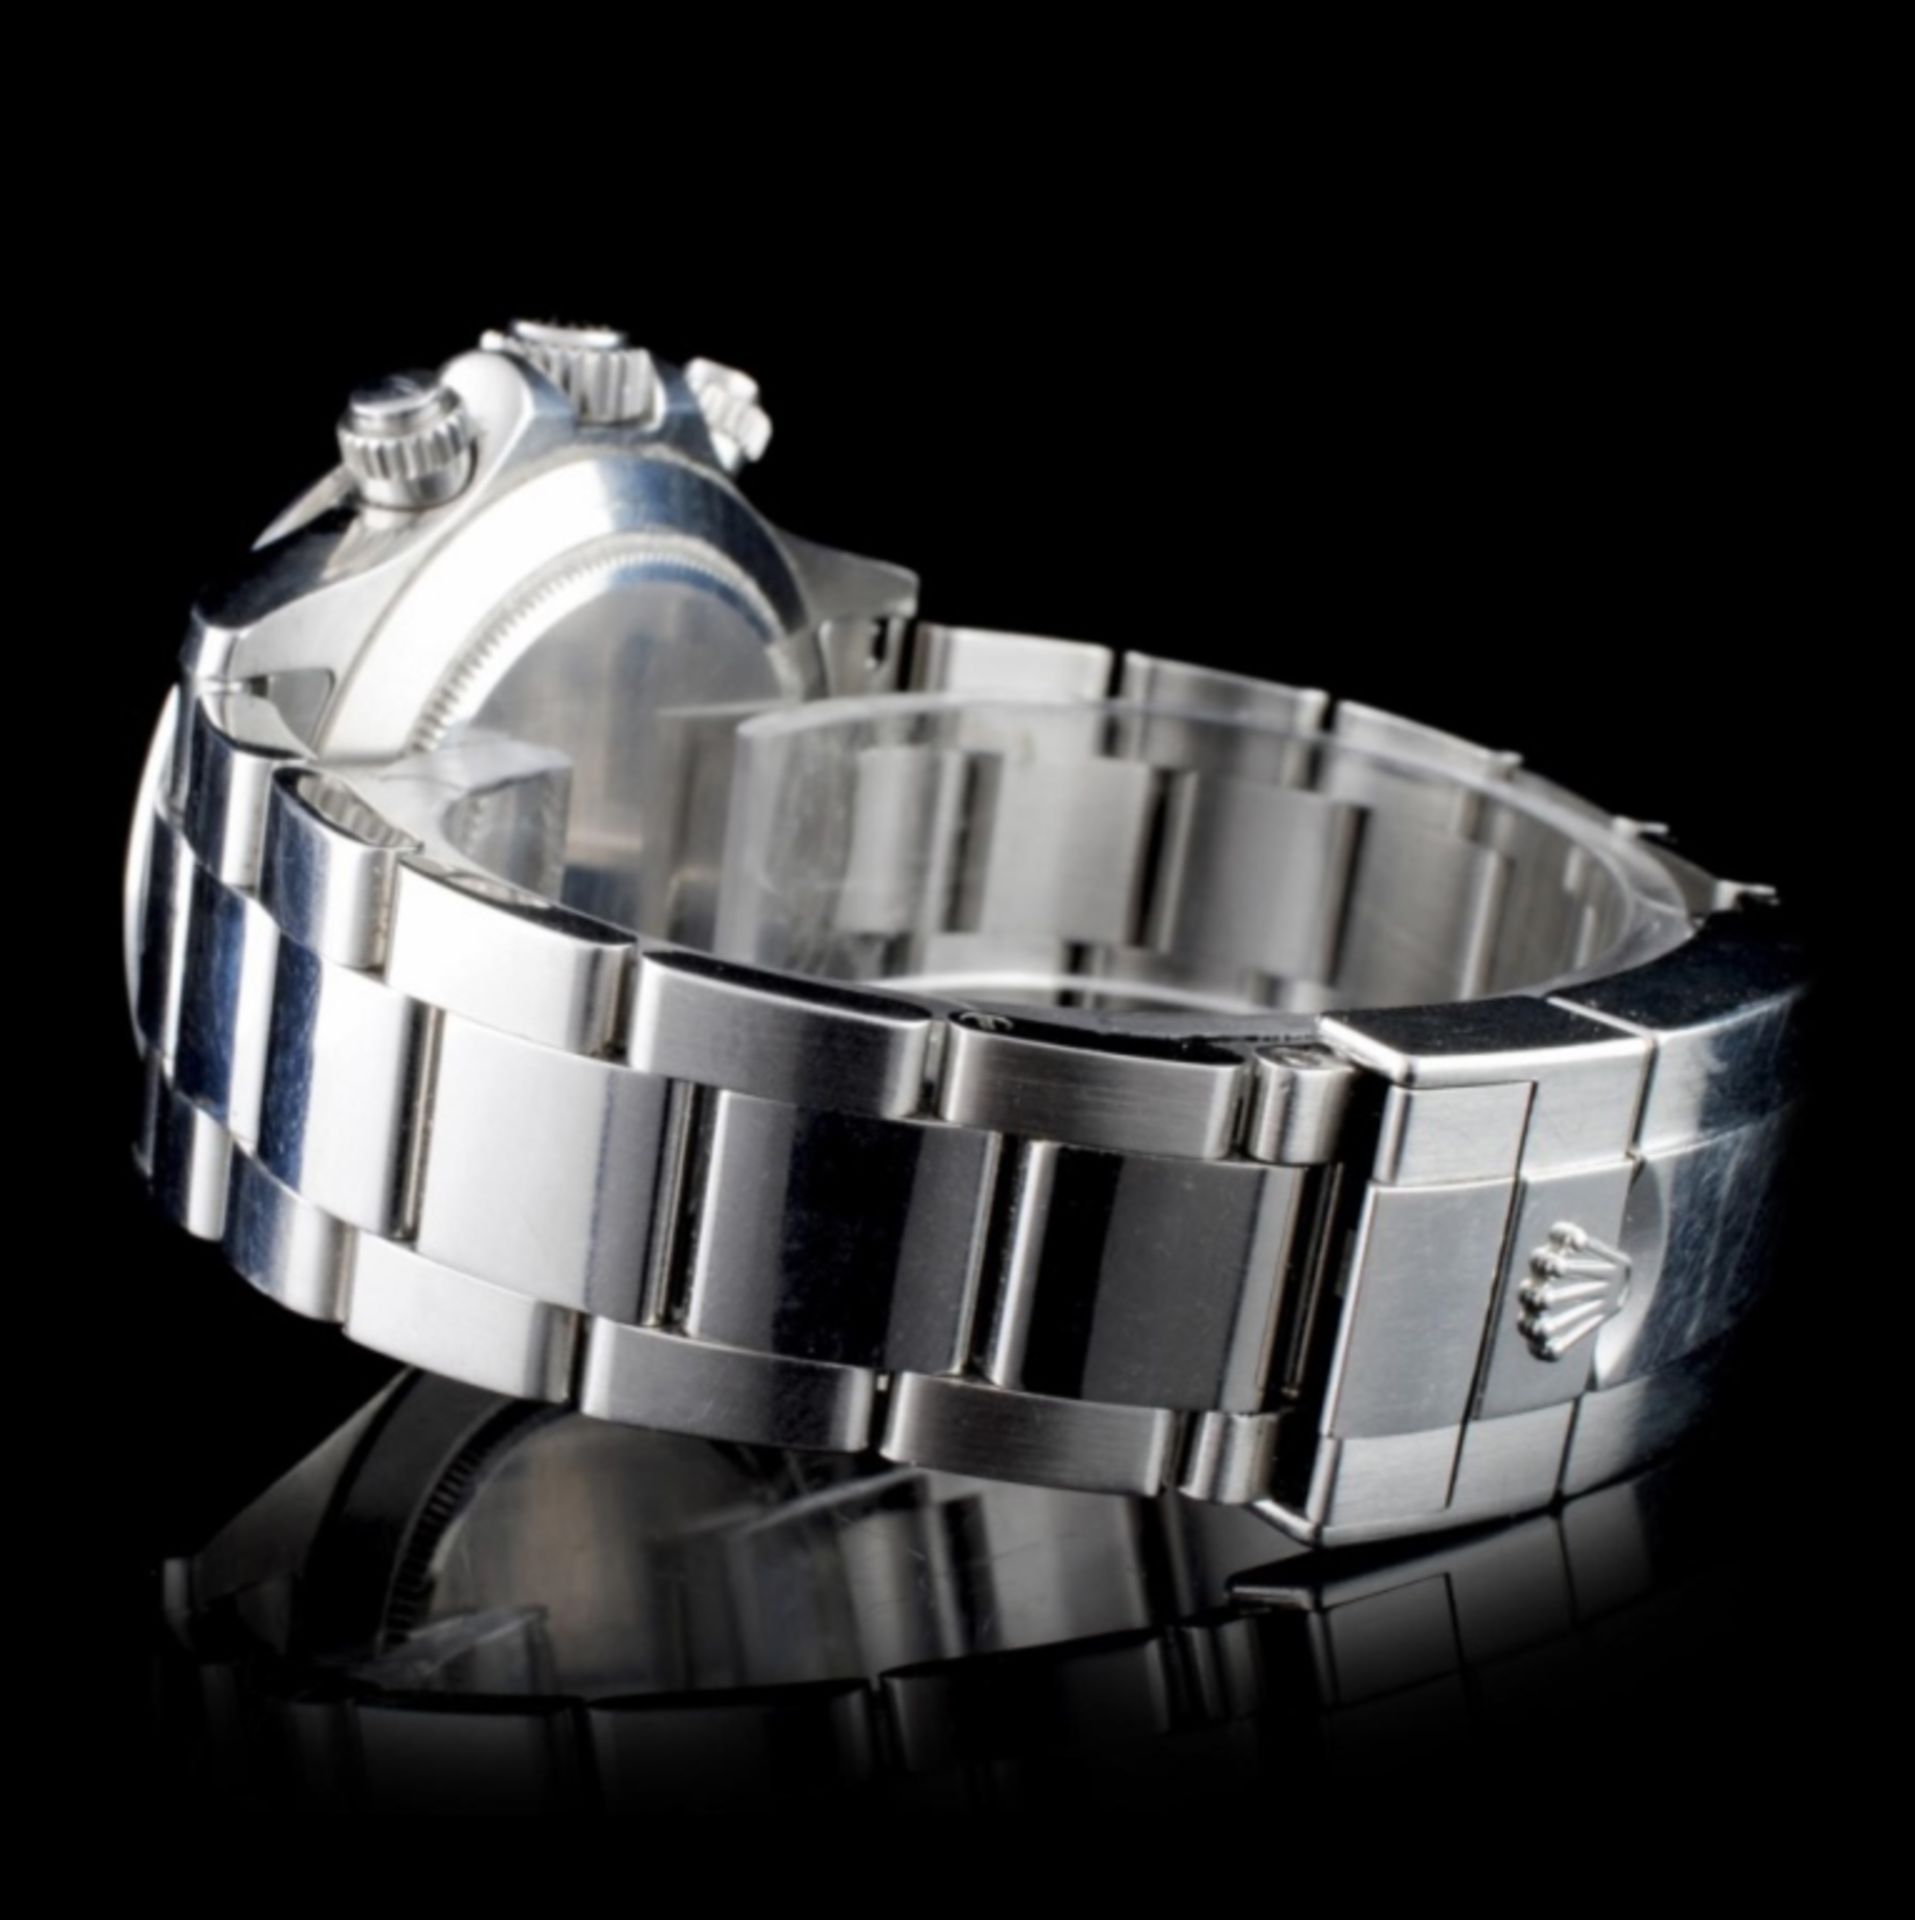 Rolex Daytona Stainless Steel Wristwatch - Image 2 of 5